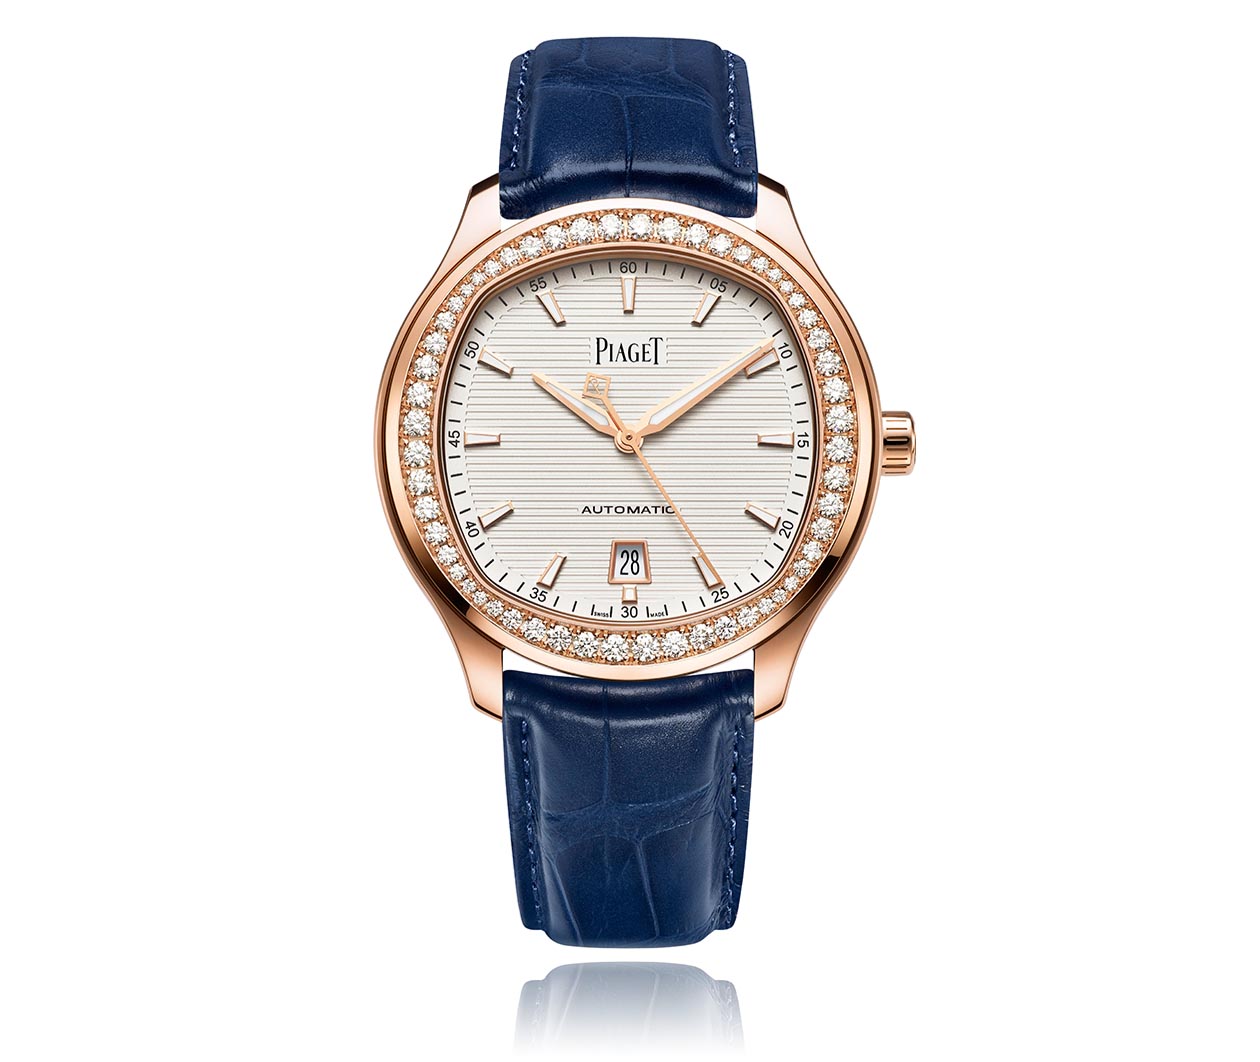 Piaget Polo watch G0A44010 Flatlay FINAL